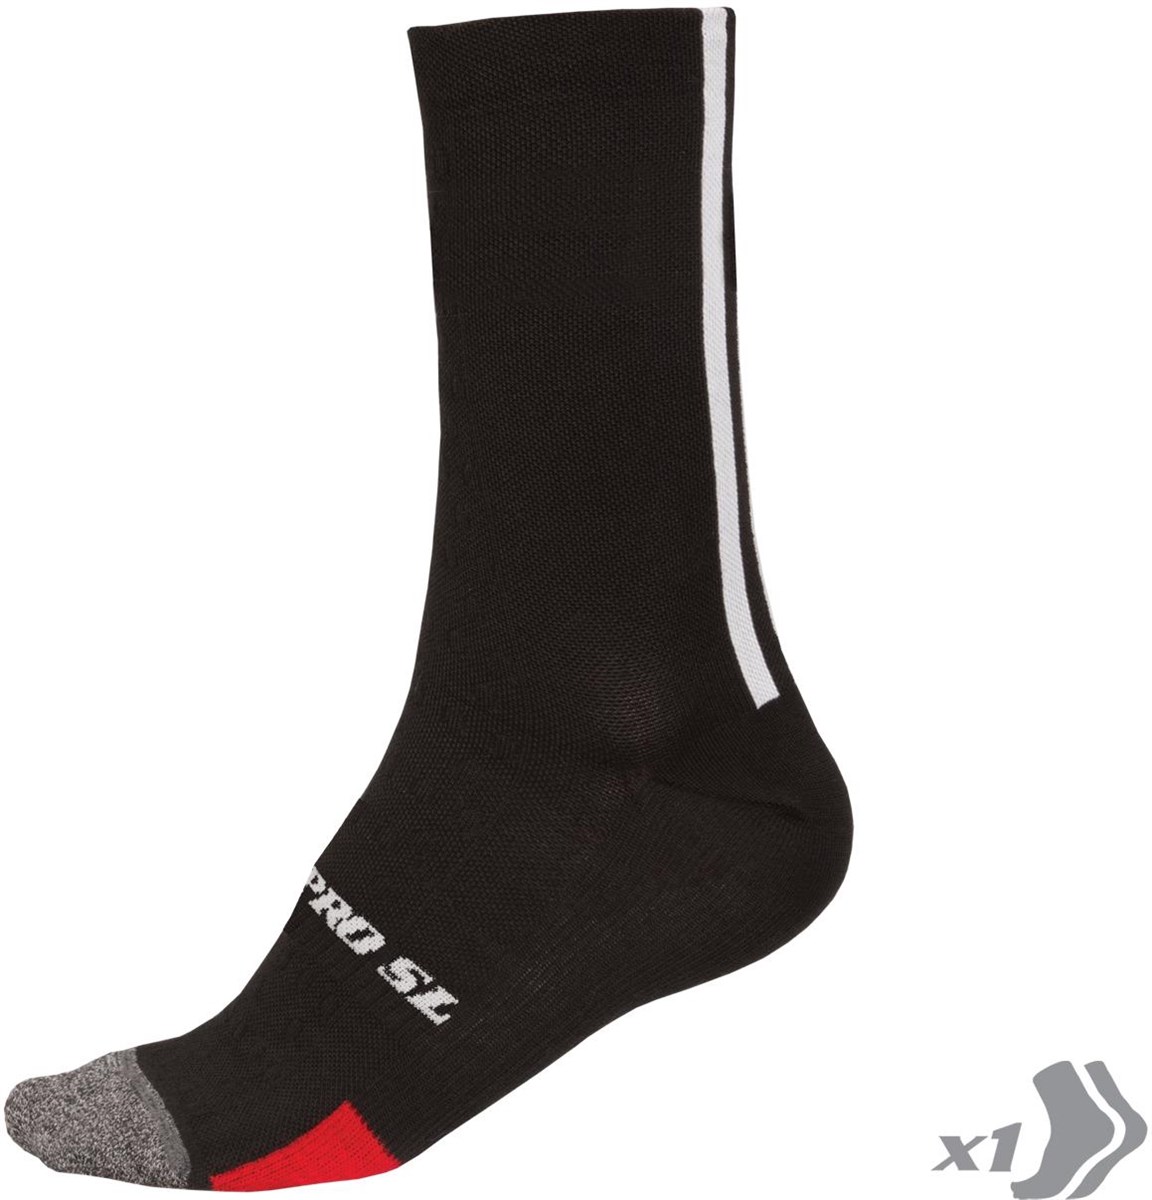 Endura Pro SL Primaloft Socks product image